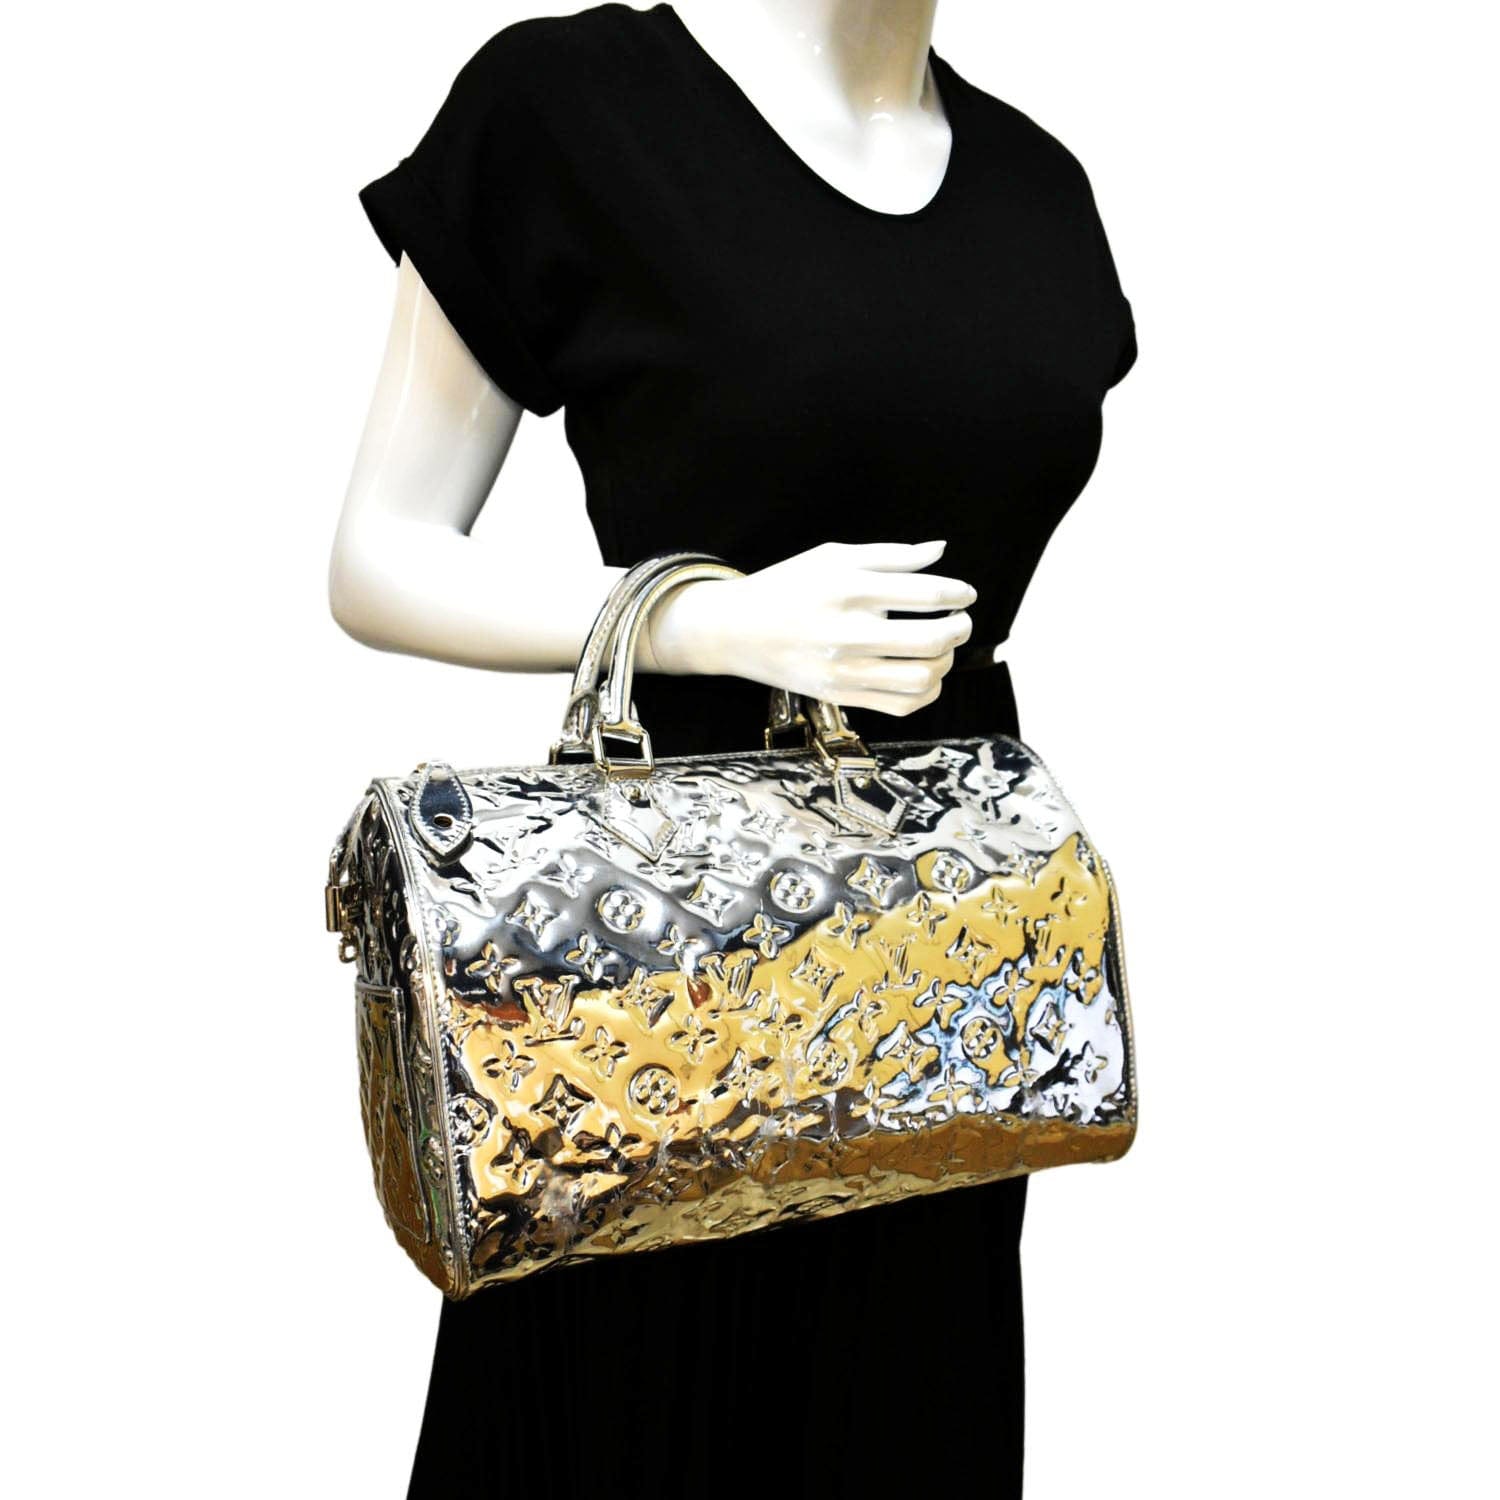 Louis Vuitton 'Monogram Miroir' Speedy handbag, Marc Jacobs